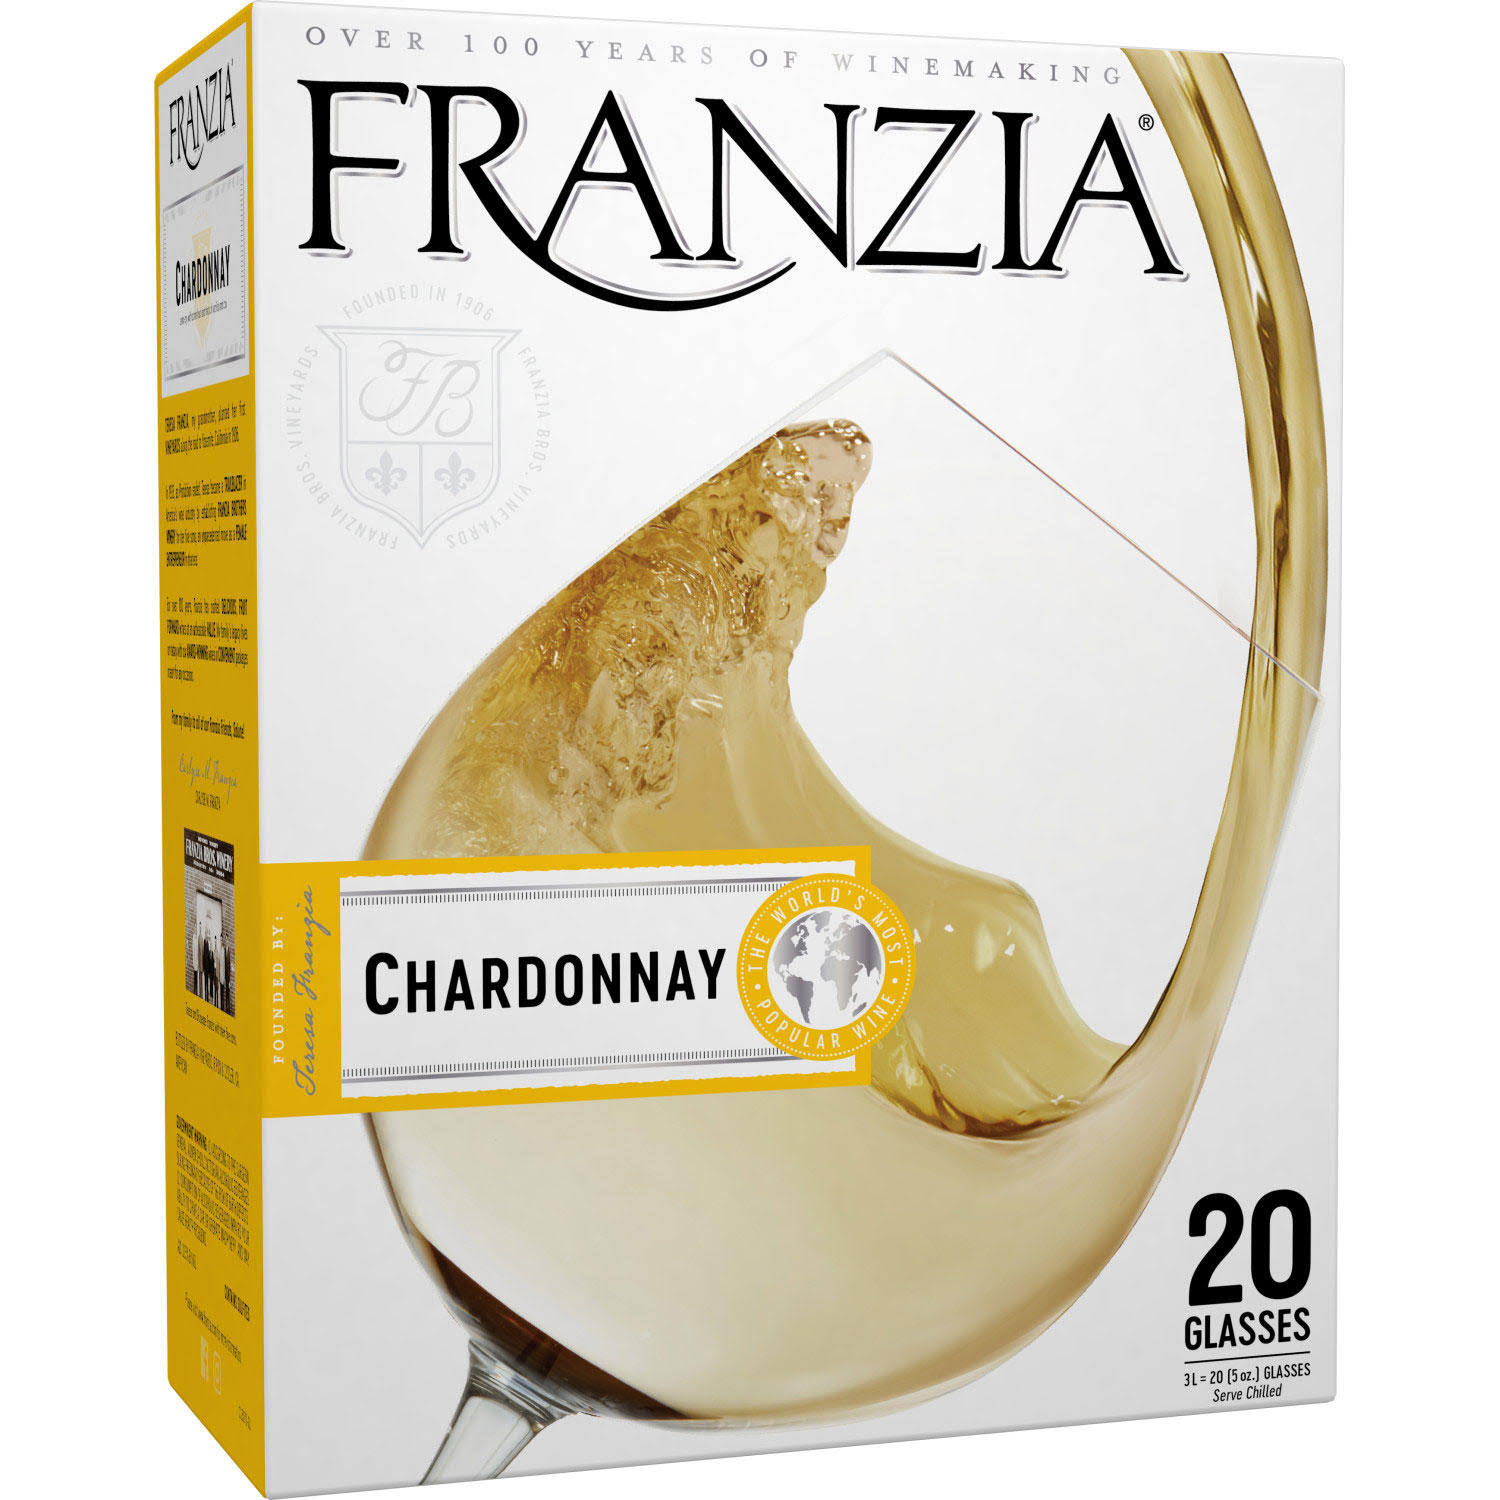 Franzia Chardonnay - 3L, California